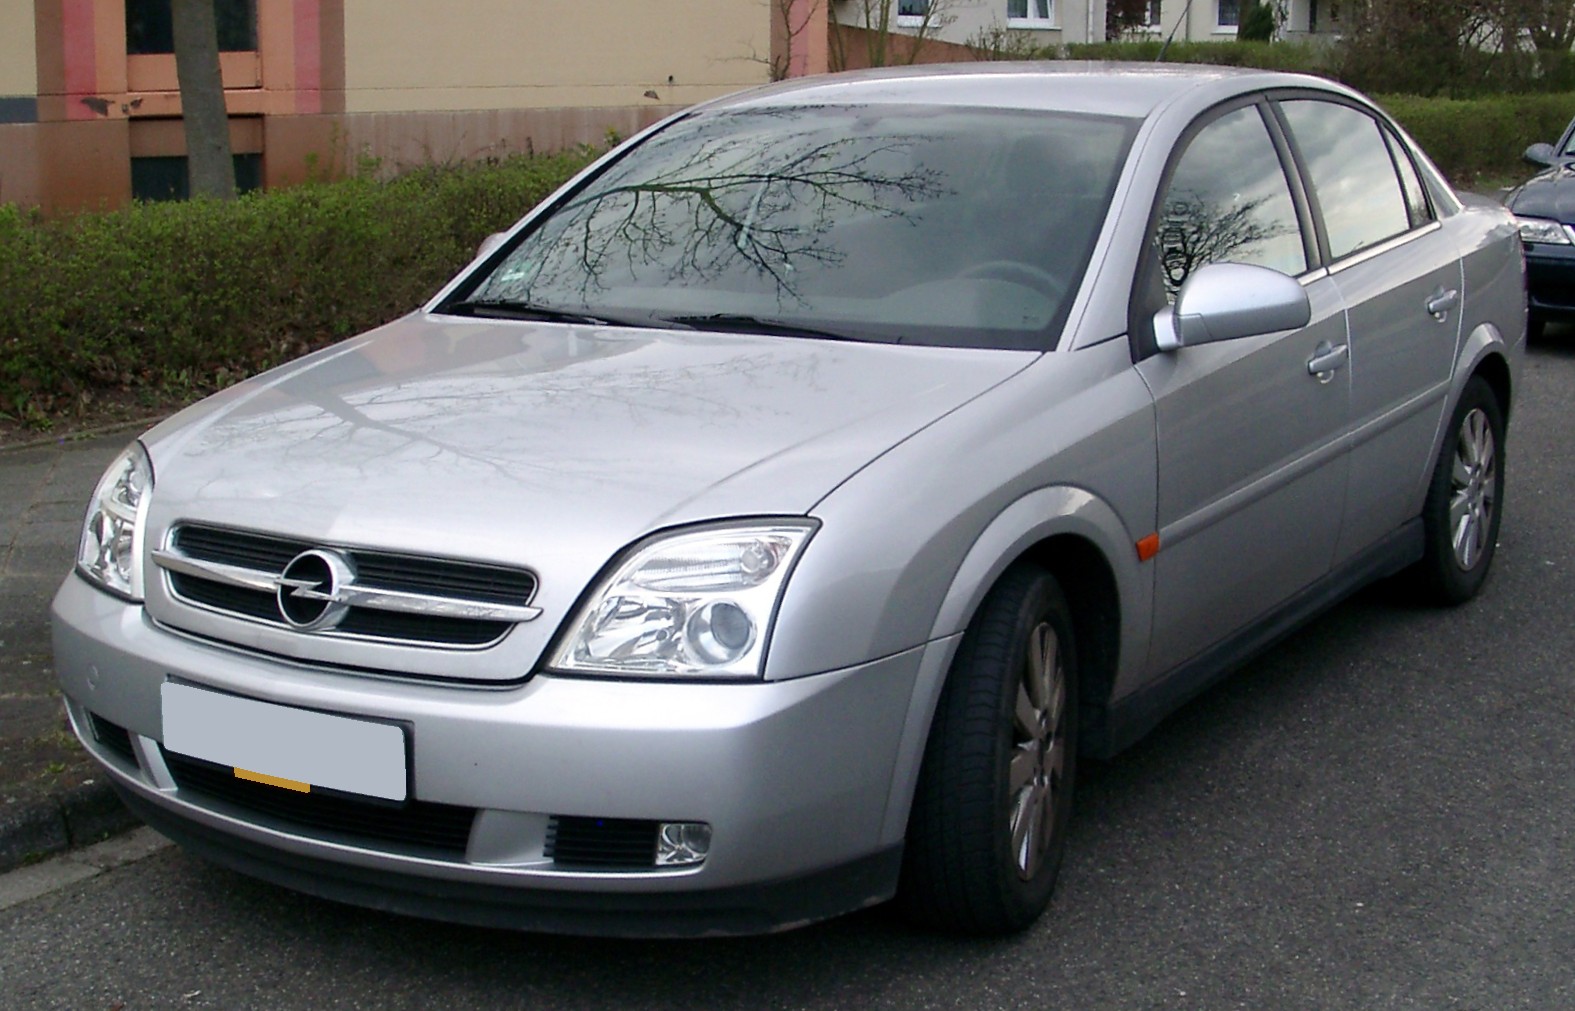 File:Opel Vectra C front 20080331.jpg